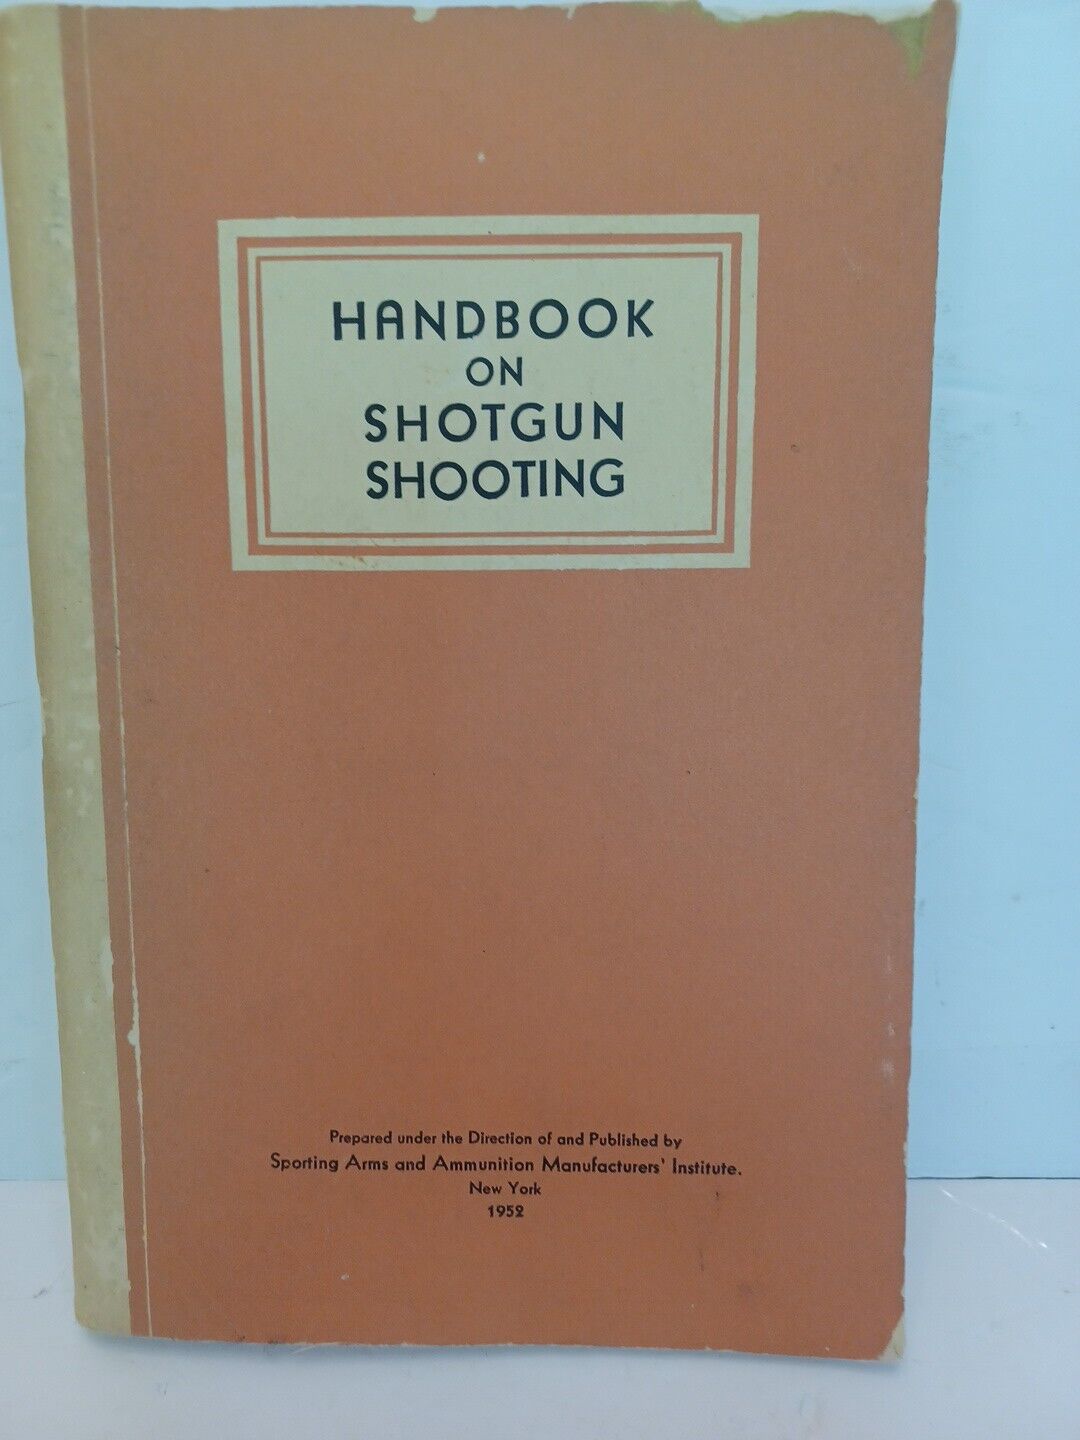 VTG 1952 HANDBOOK ON SHOTGUN SHOOTING BOOK *SPORTING ARMS INSTITUTE* USED